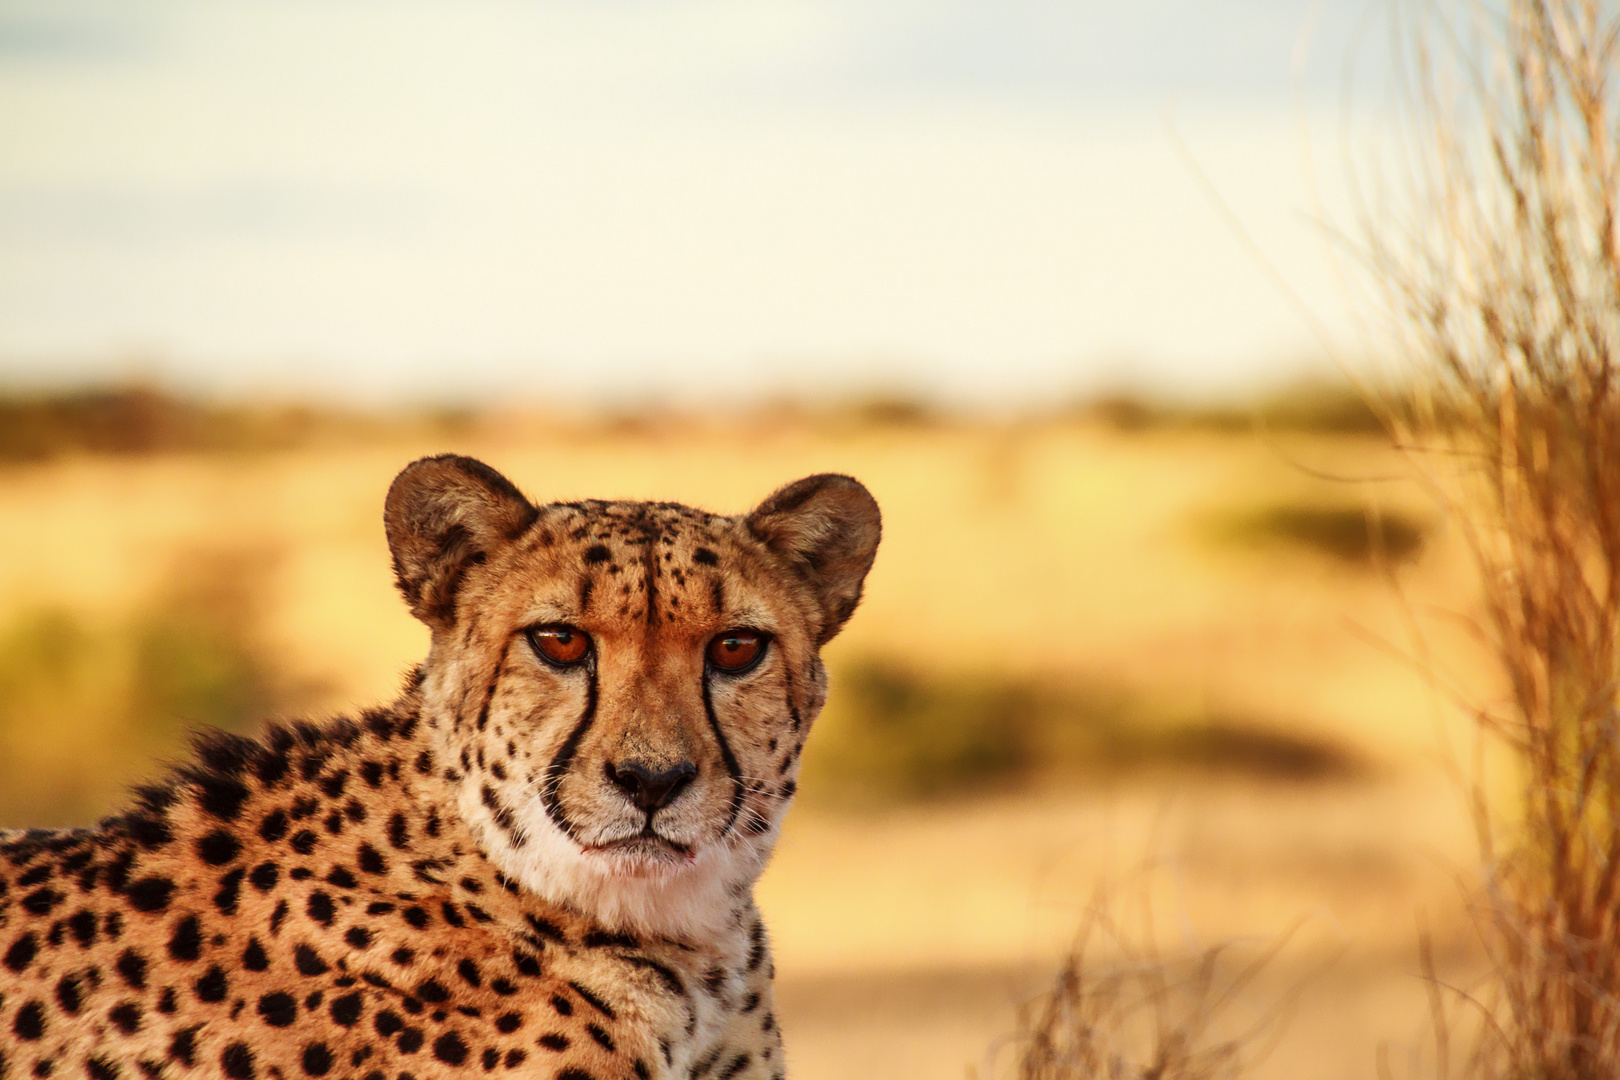  cheetah portrait